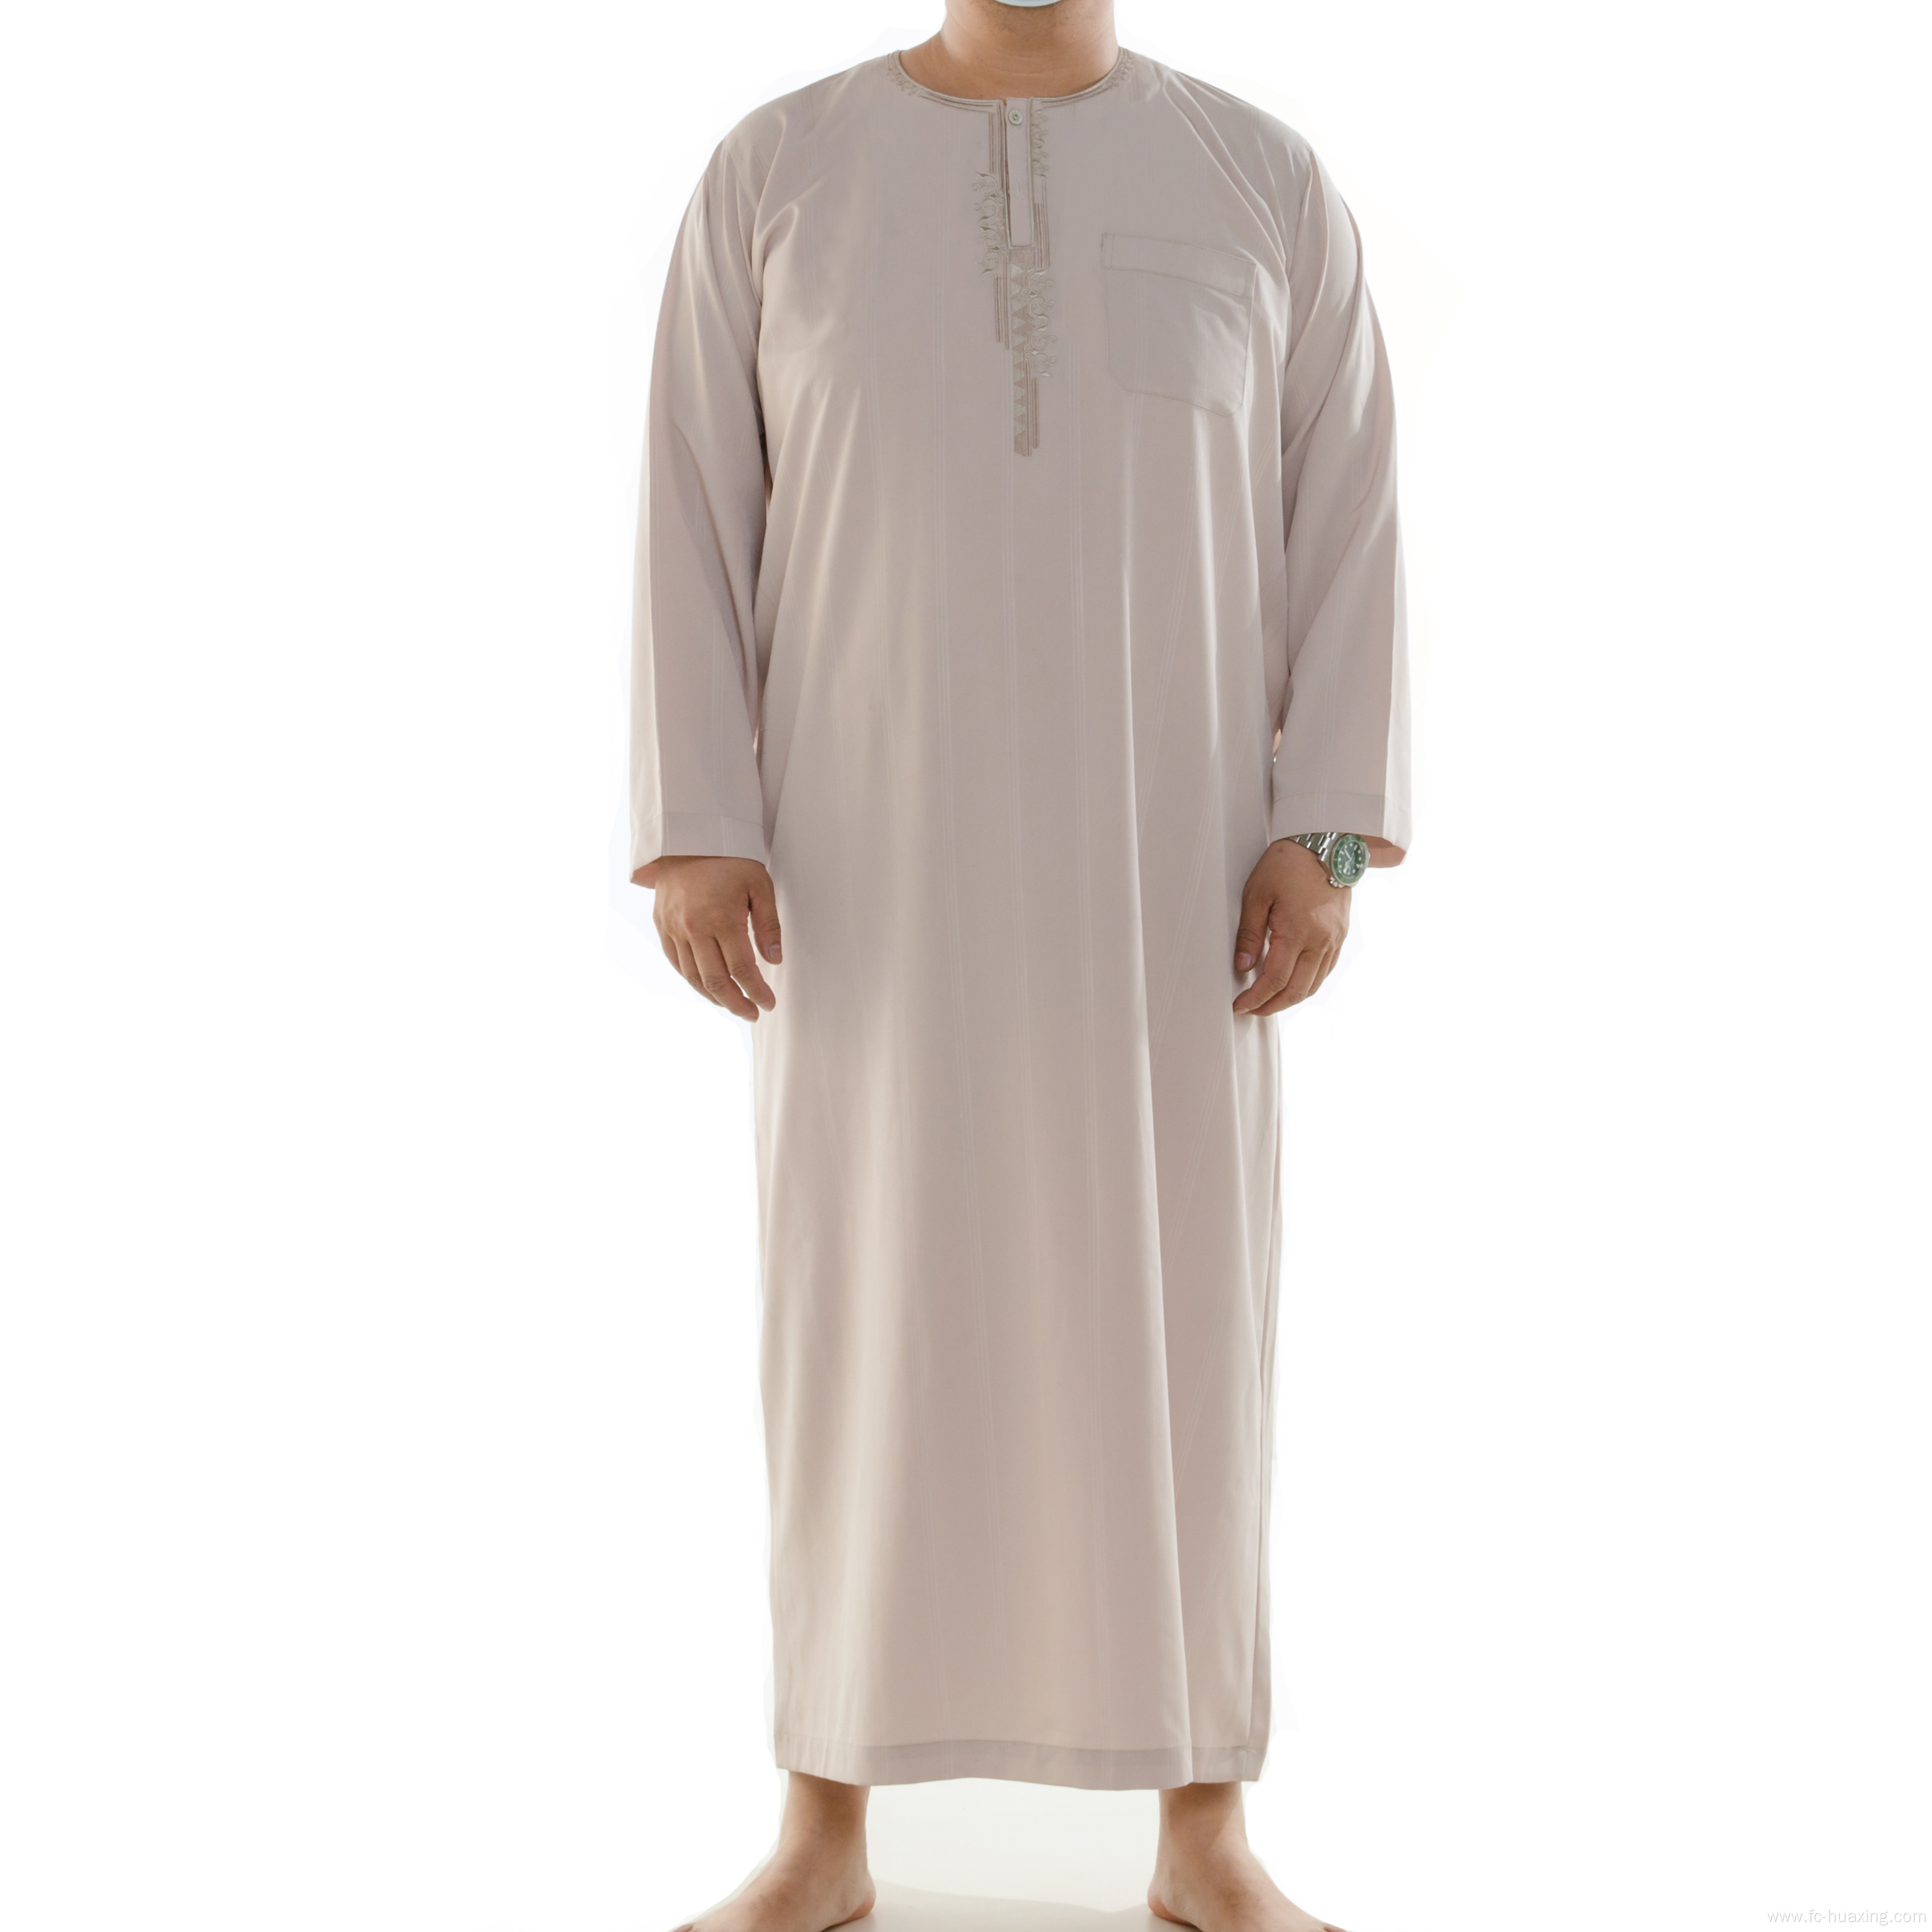 Dubai Men's Robes Multicolor Ethnic Clothing